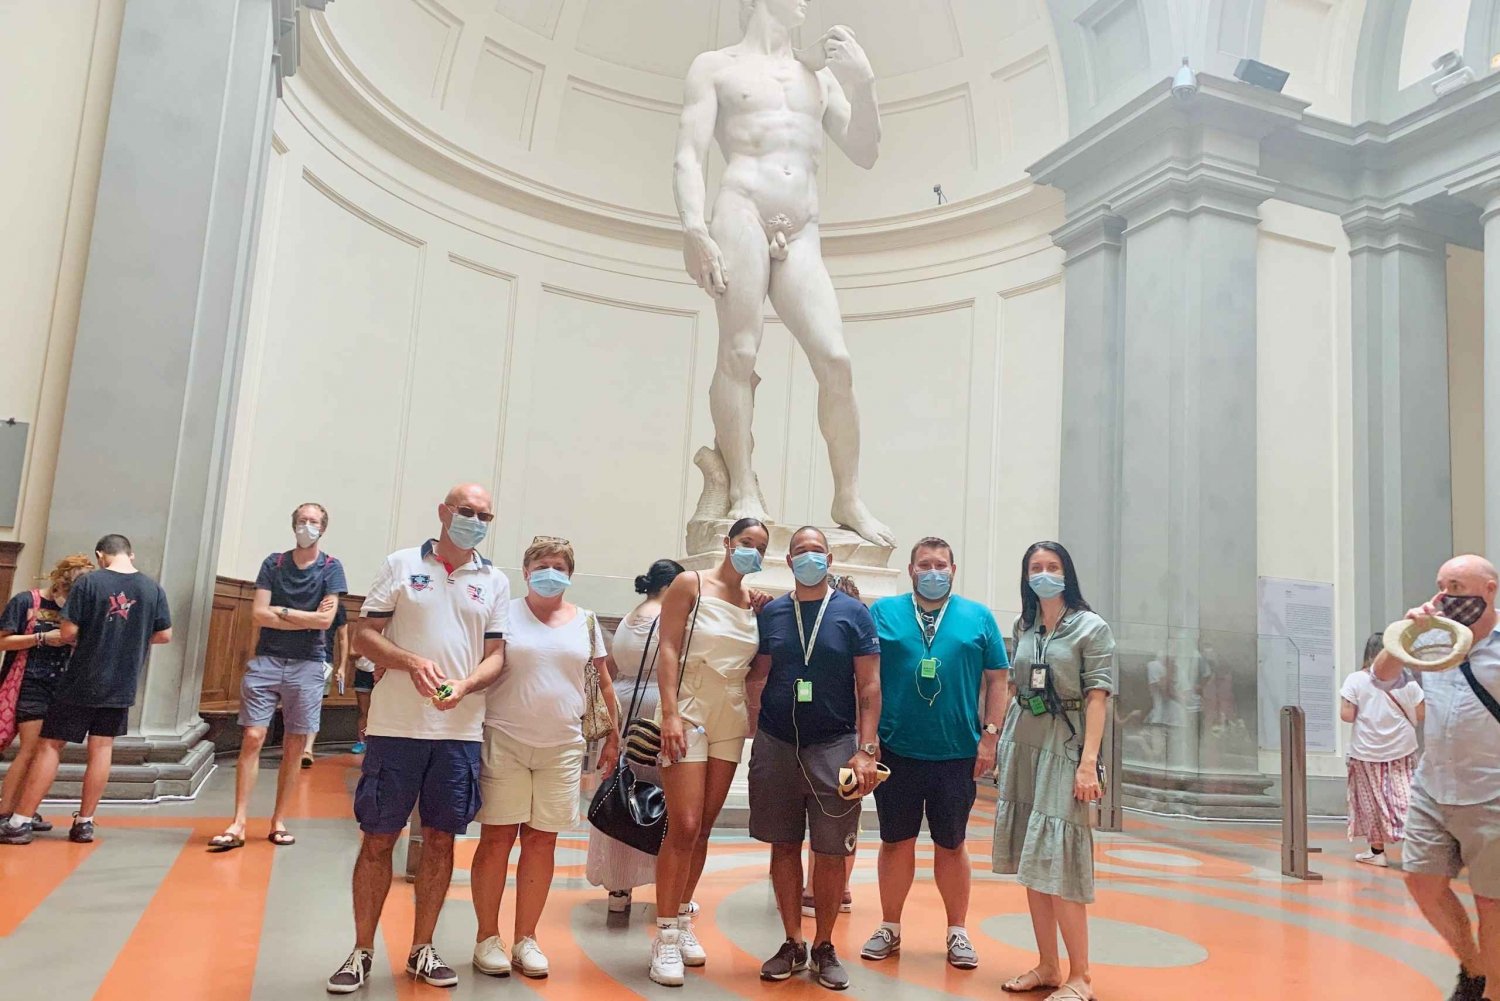 Firenze: Accademia-galleriet - guidet tur med entrébillet